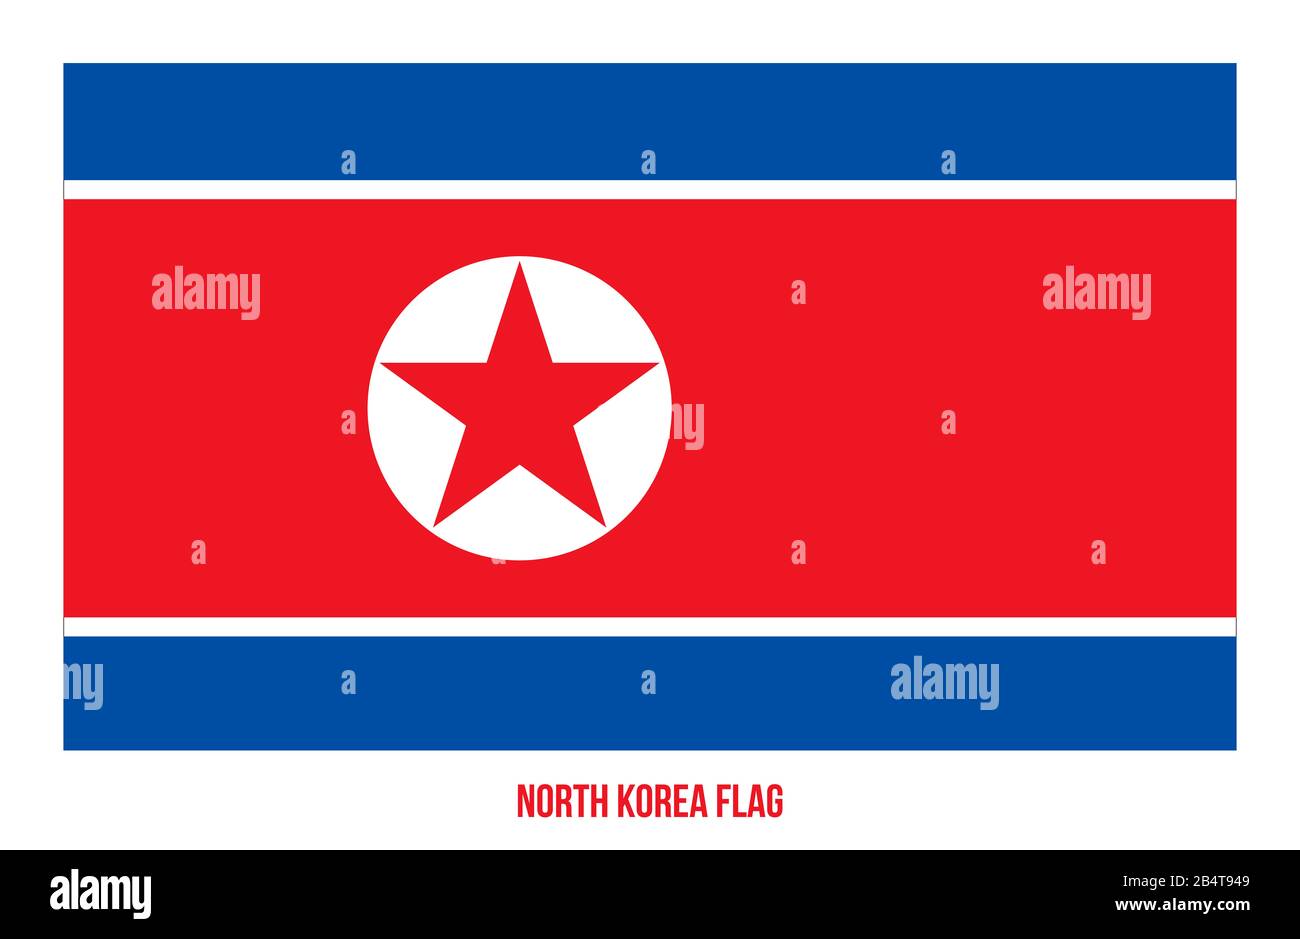 North Korea Flag Vector Illustration on White Background. North Korea  National Flag Stock Photo - Alamy